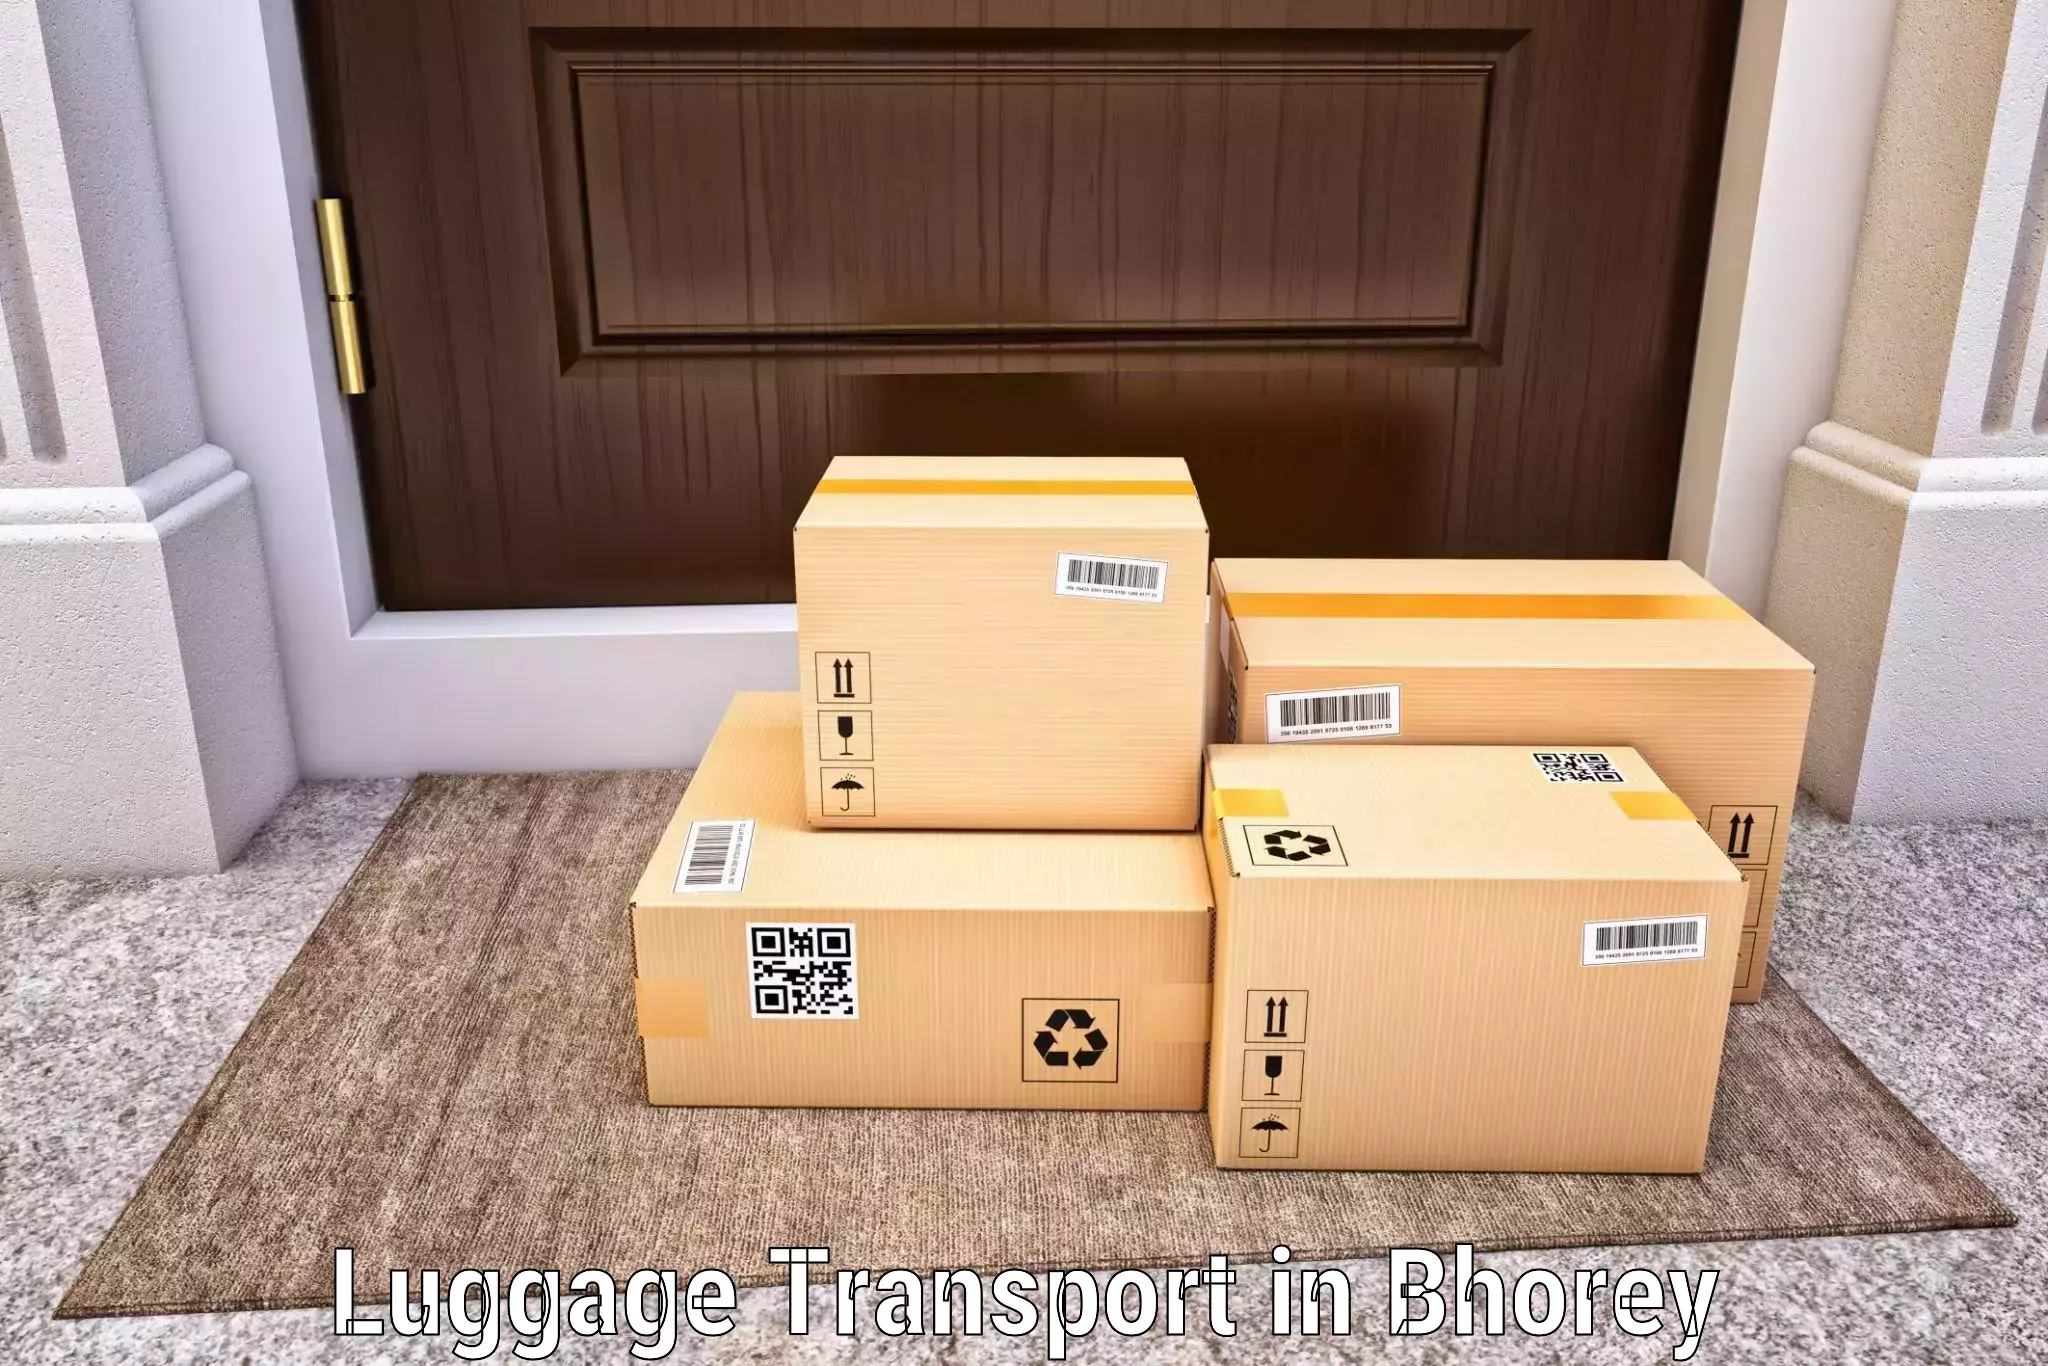 Premium luggage delivery in Bhorey